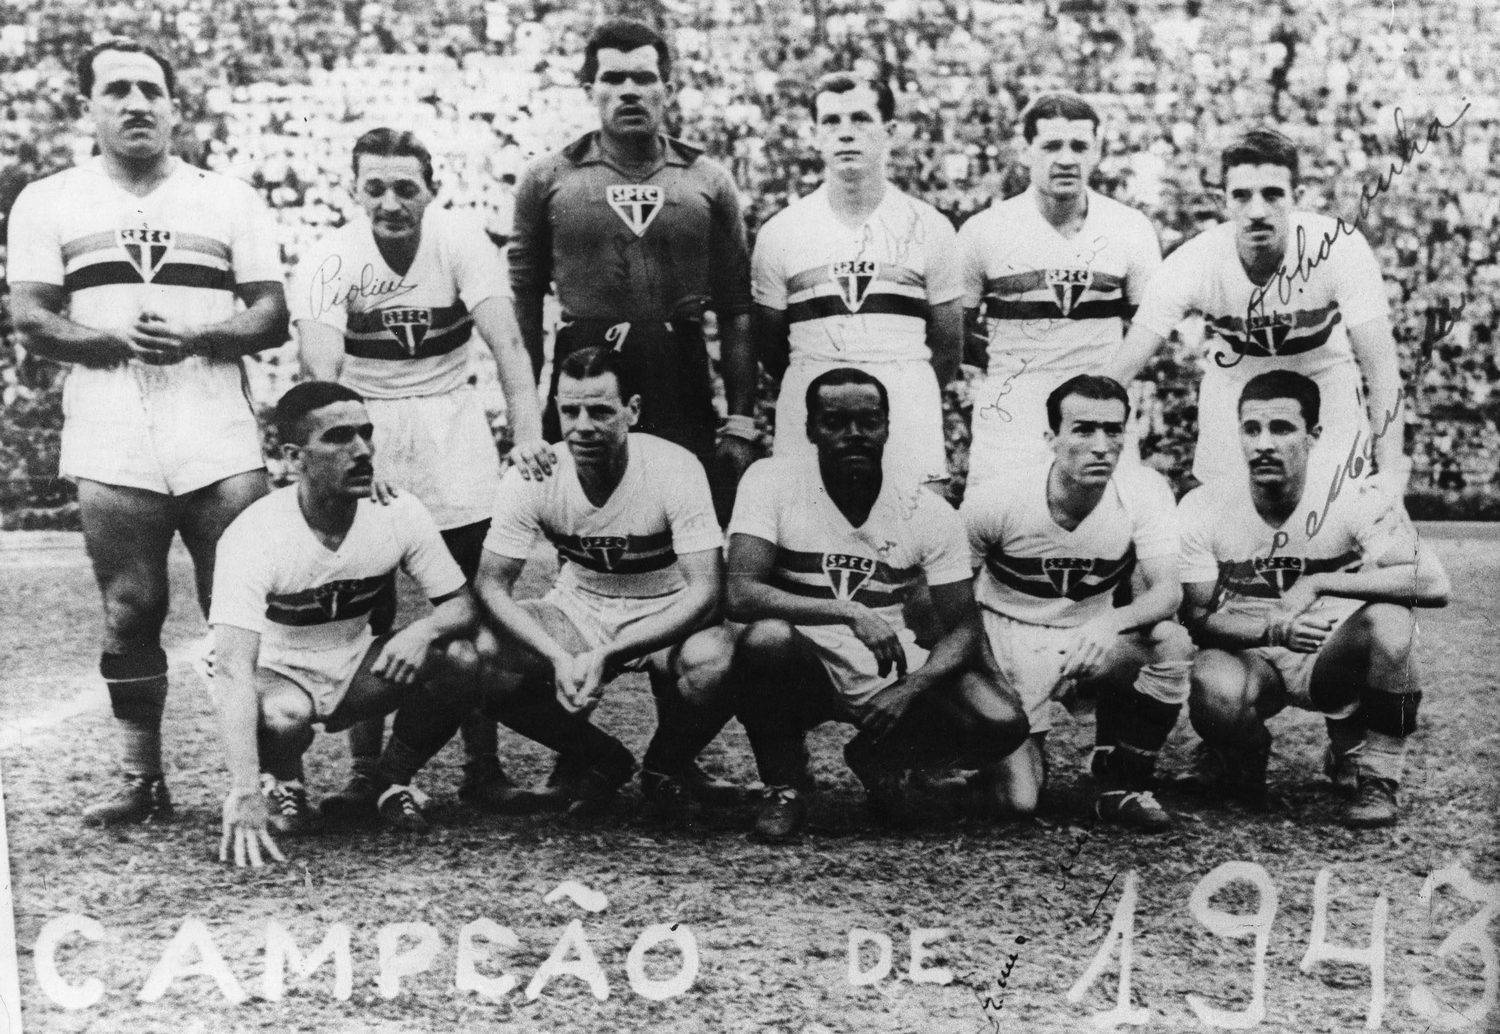 File:Taça Campeonato Paulista 2009.jpg - Wikimedia Commons